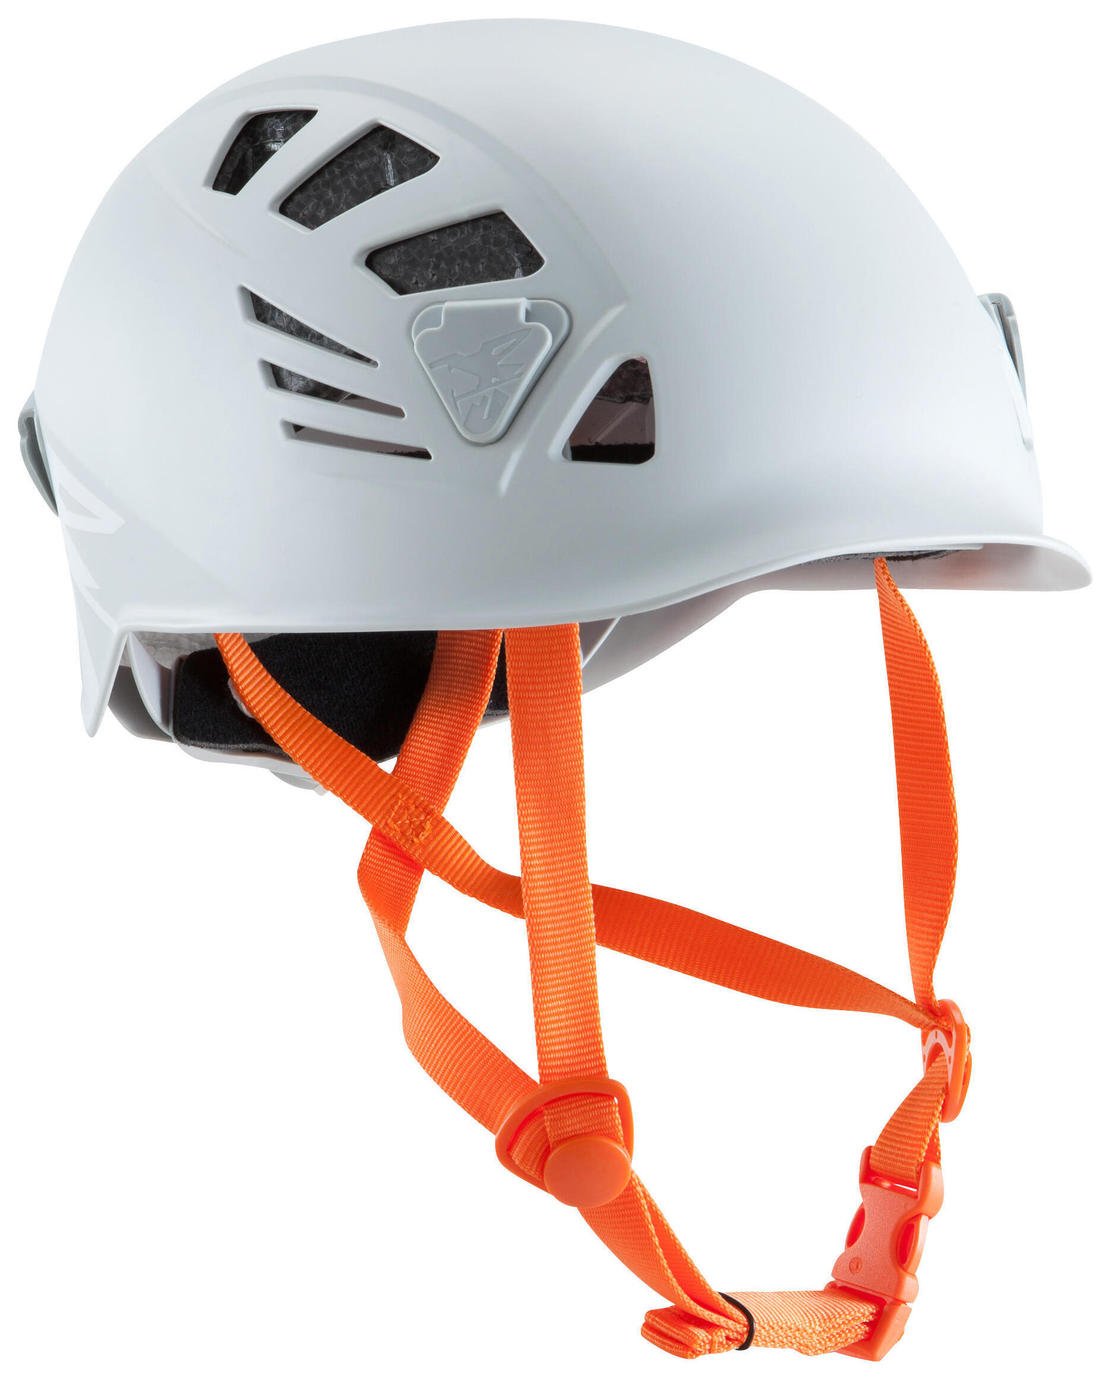 Decathlon Climbing Adult Bike Helmet - Grey, 50-57cm